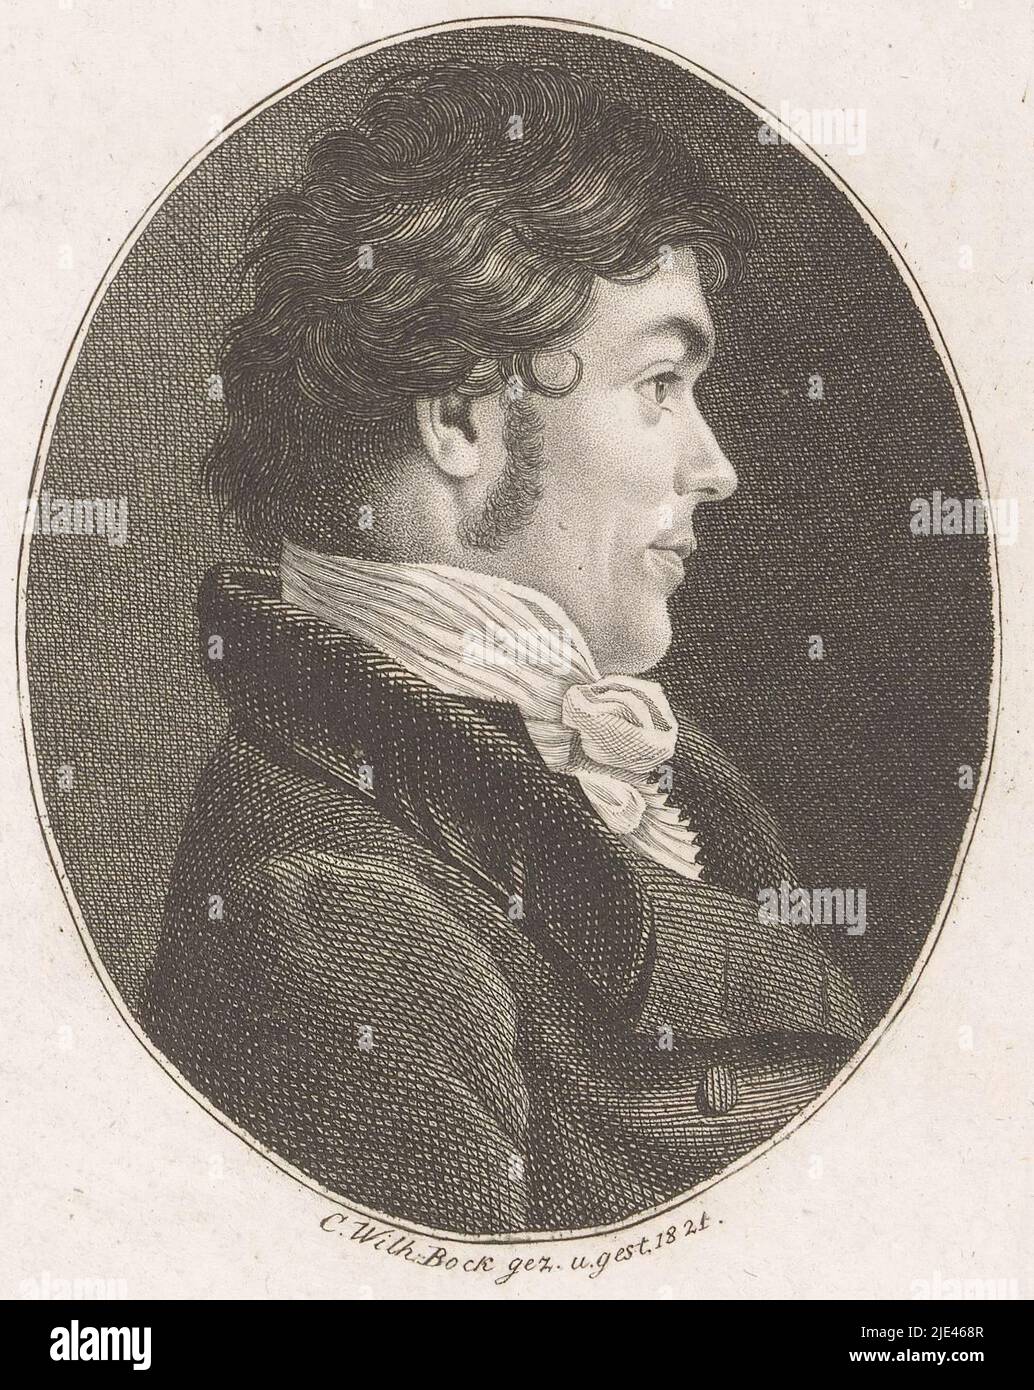 Portrait of Friedrich von Boeckh, Christoph Wilhelm Bock, 1821, print maker: Christoph Wilhelm Bock, (mentioned on object), Christoph Wilhelm Bock, (mentioned on object), Neurenberg, 1821, paper, engraving, h 181 mm - w 113 mm Stock Photo